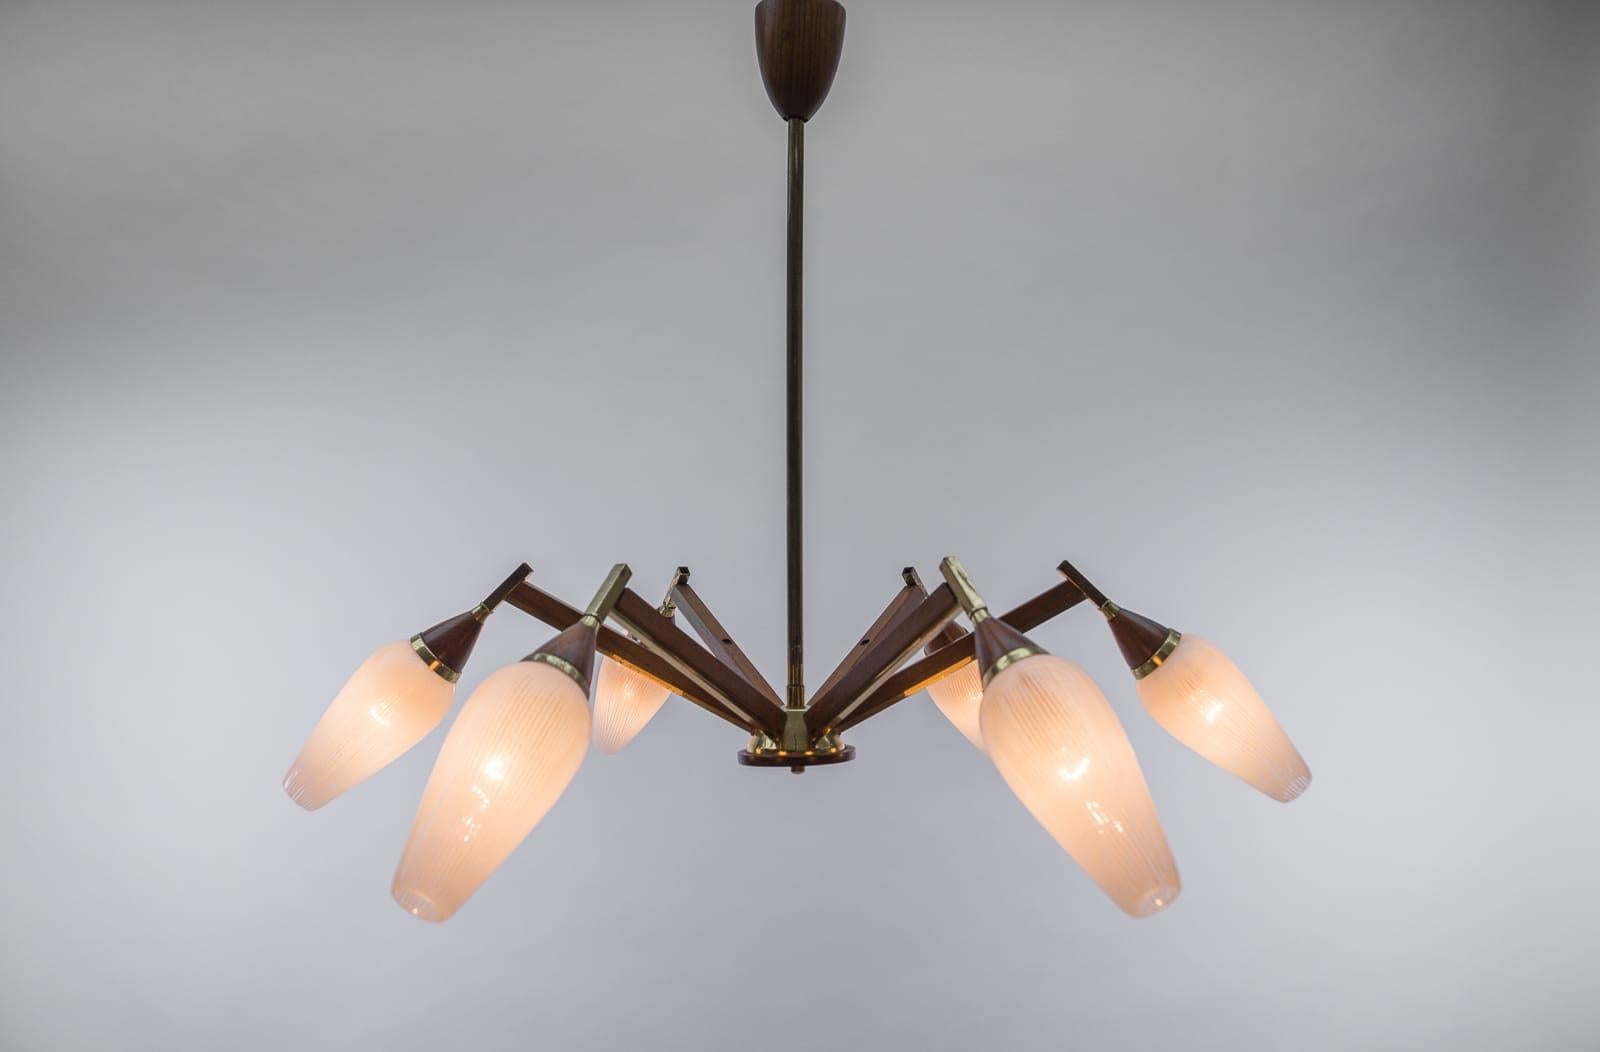 Mid-Century Modern Ceiling 6-Light Sputnik Lamp in Teak, Brass and Glass, 1950s For Sale